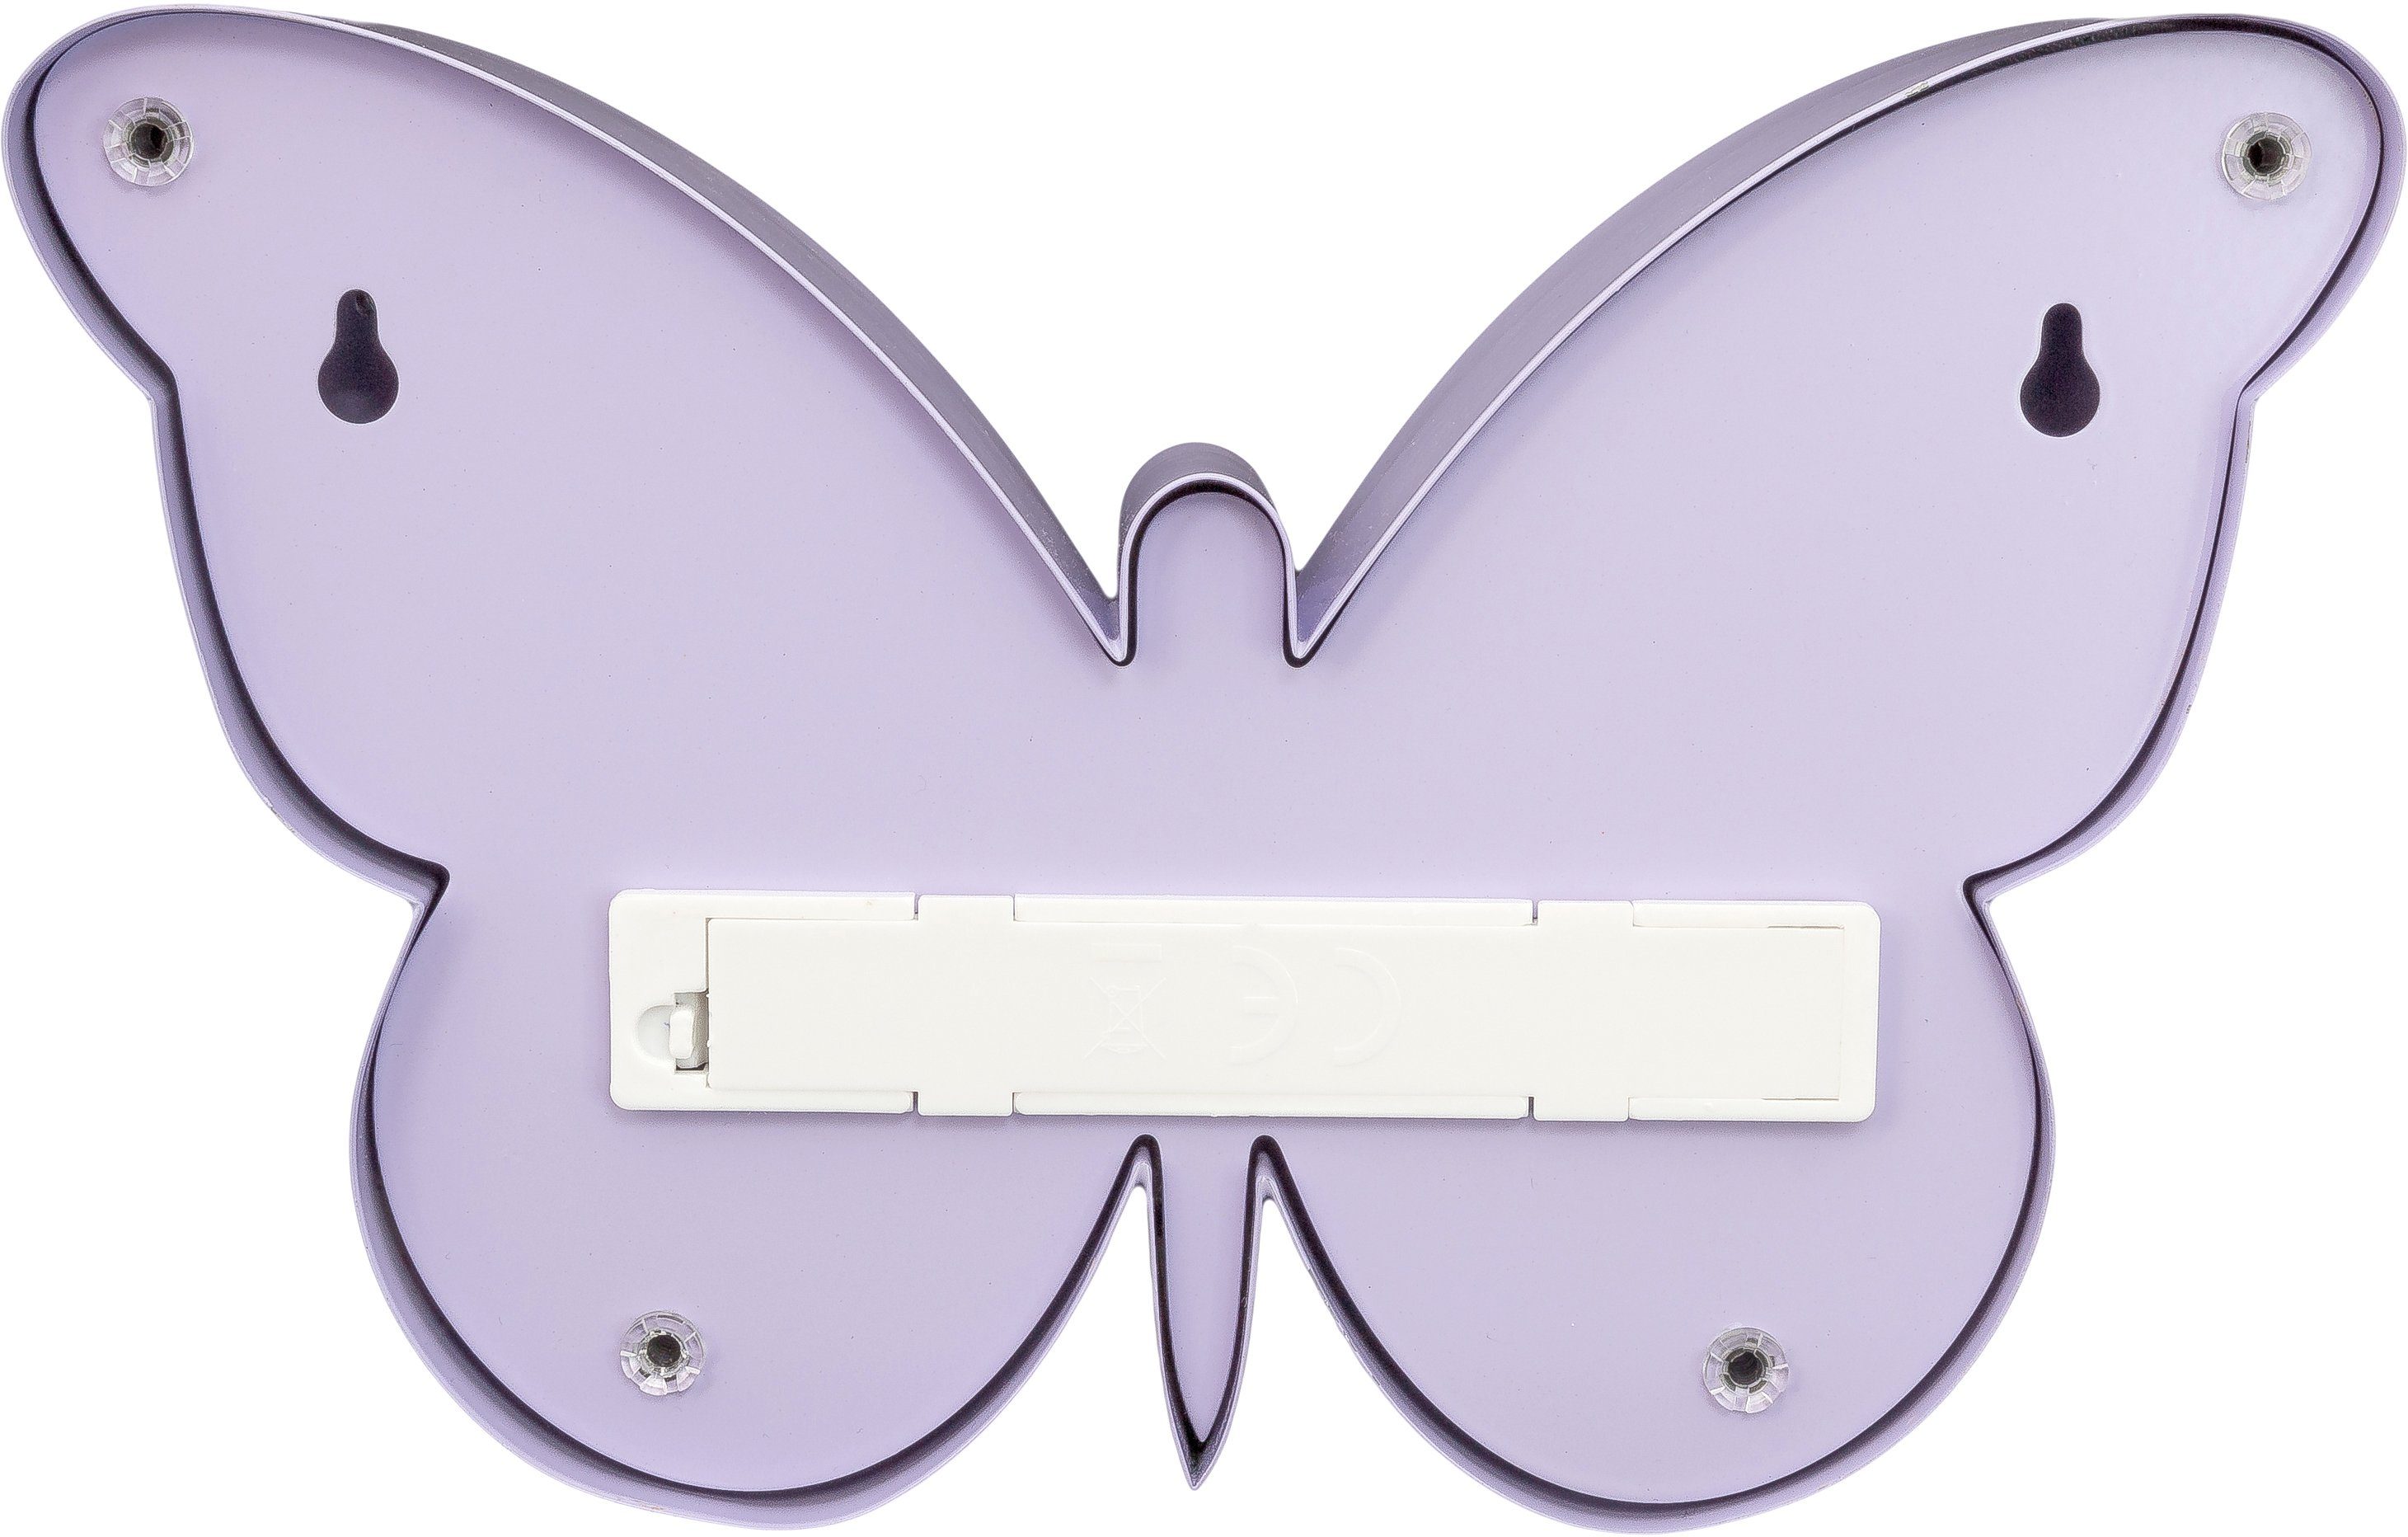 MARQUEE LIGHTS LED Dekolicht Butterfly, lila 15 cm Wandlampe, 23x - integriert, Warmweiß, LED Butterfly mit 15 Tischlampe fest LEDs festverbauten